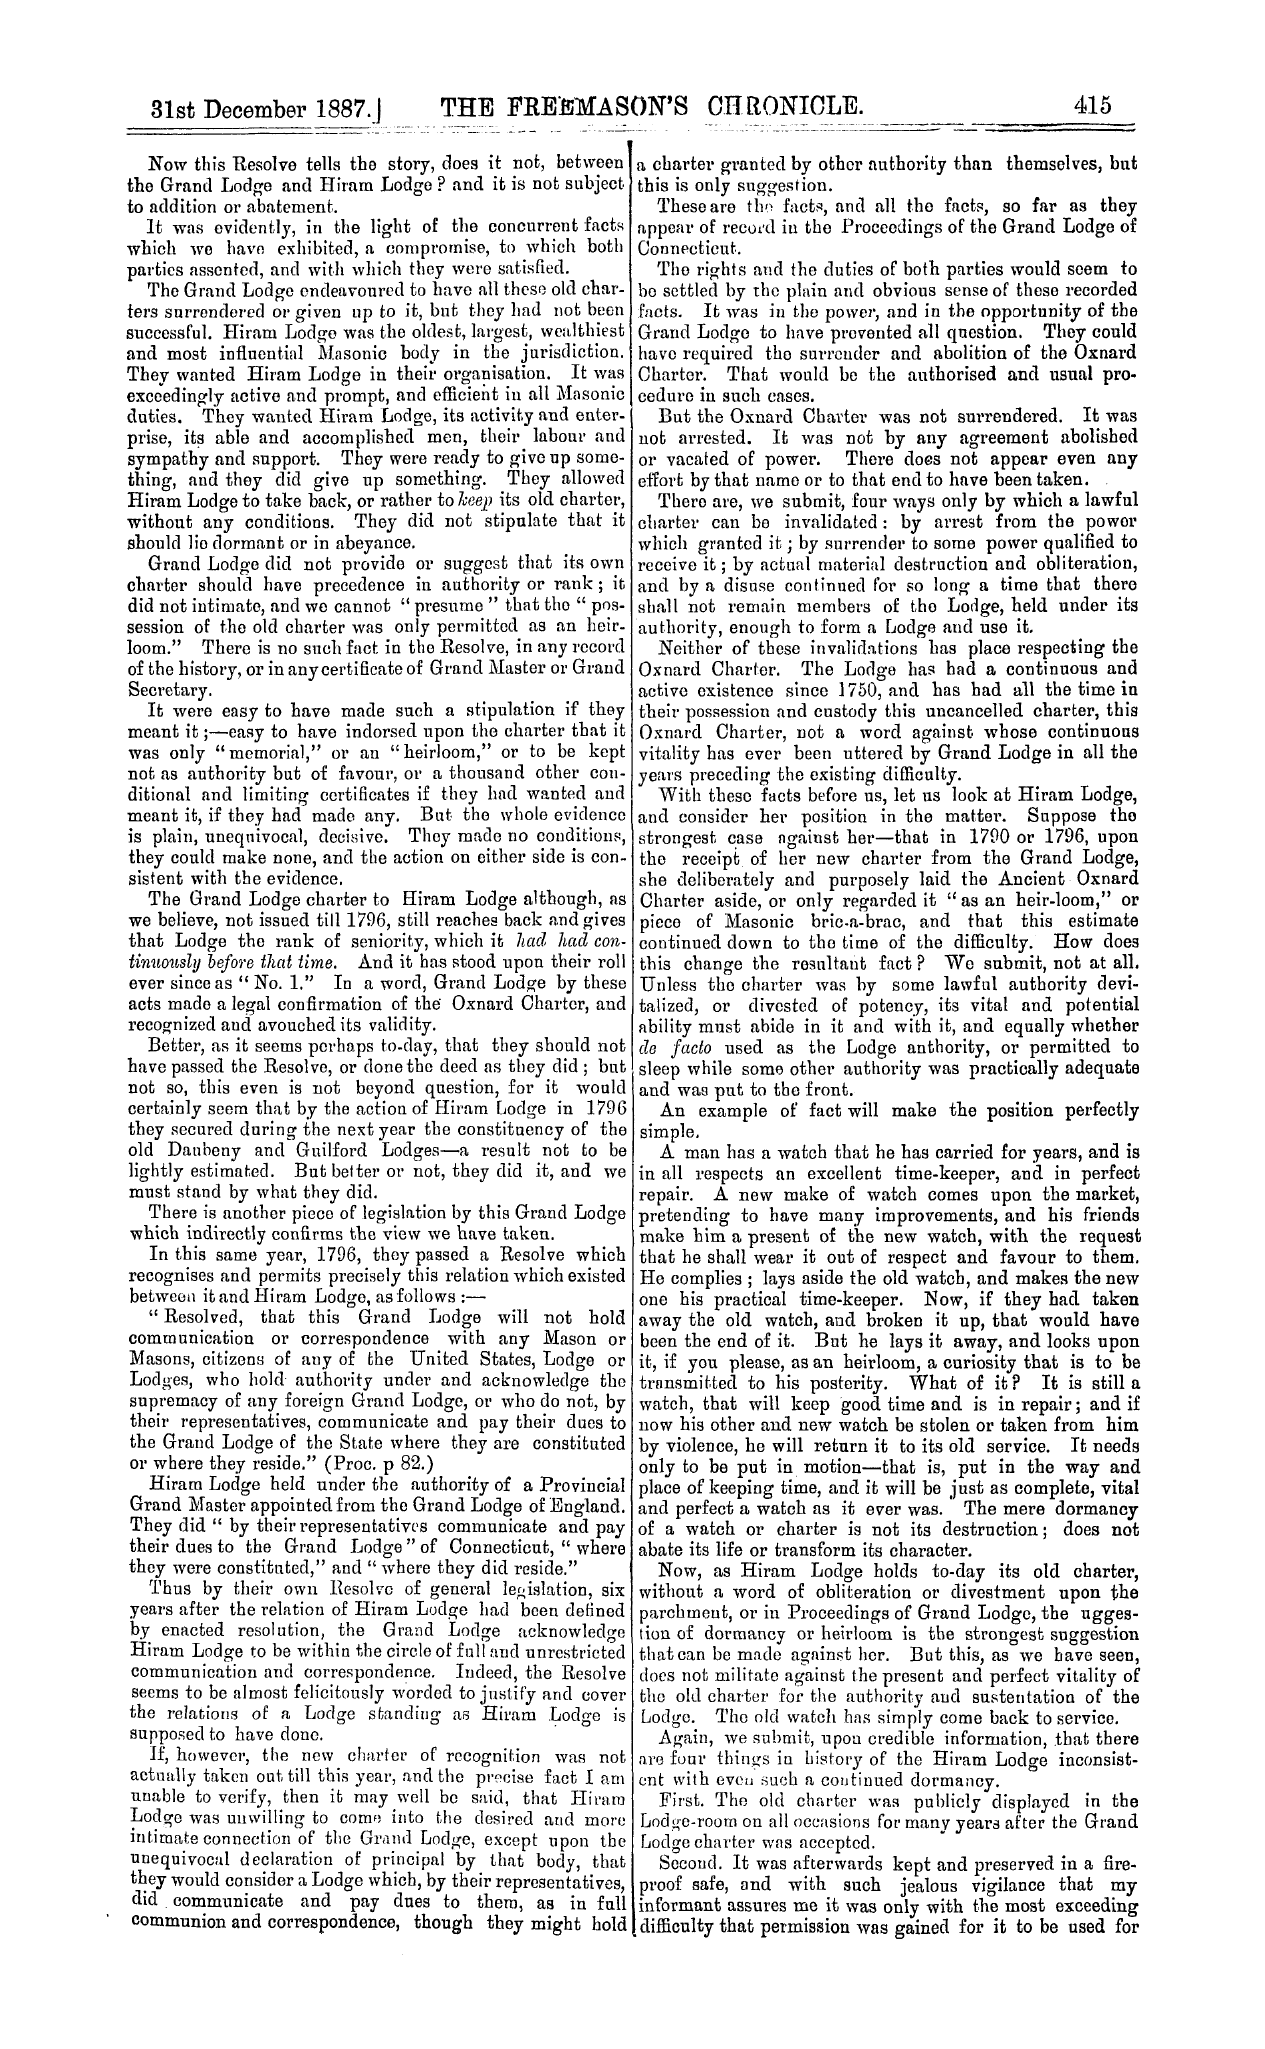 The Freemason's Chronicle: 1887-12-31 - Hiram Lodge.